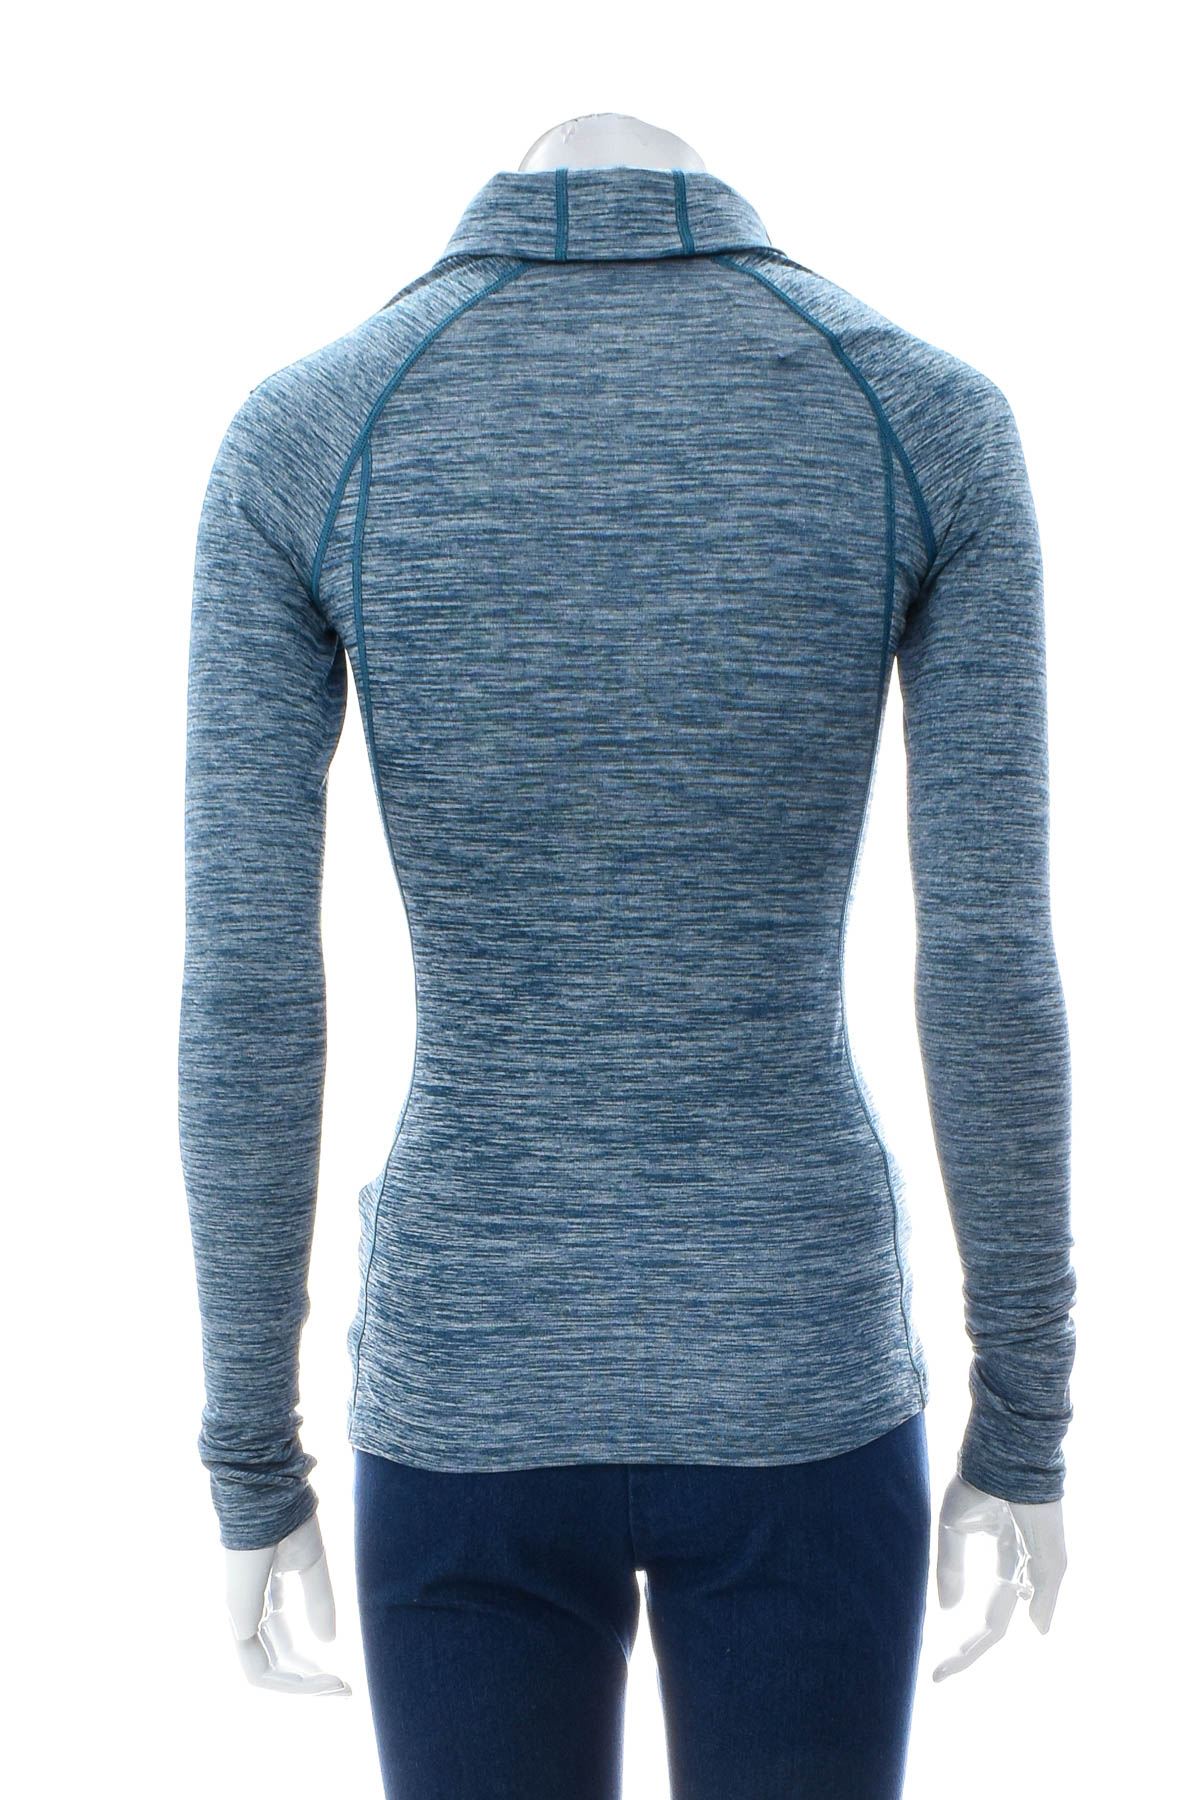 Women's sport blouse - UNDER ARMOUR - 1